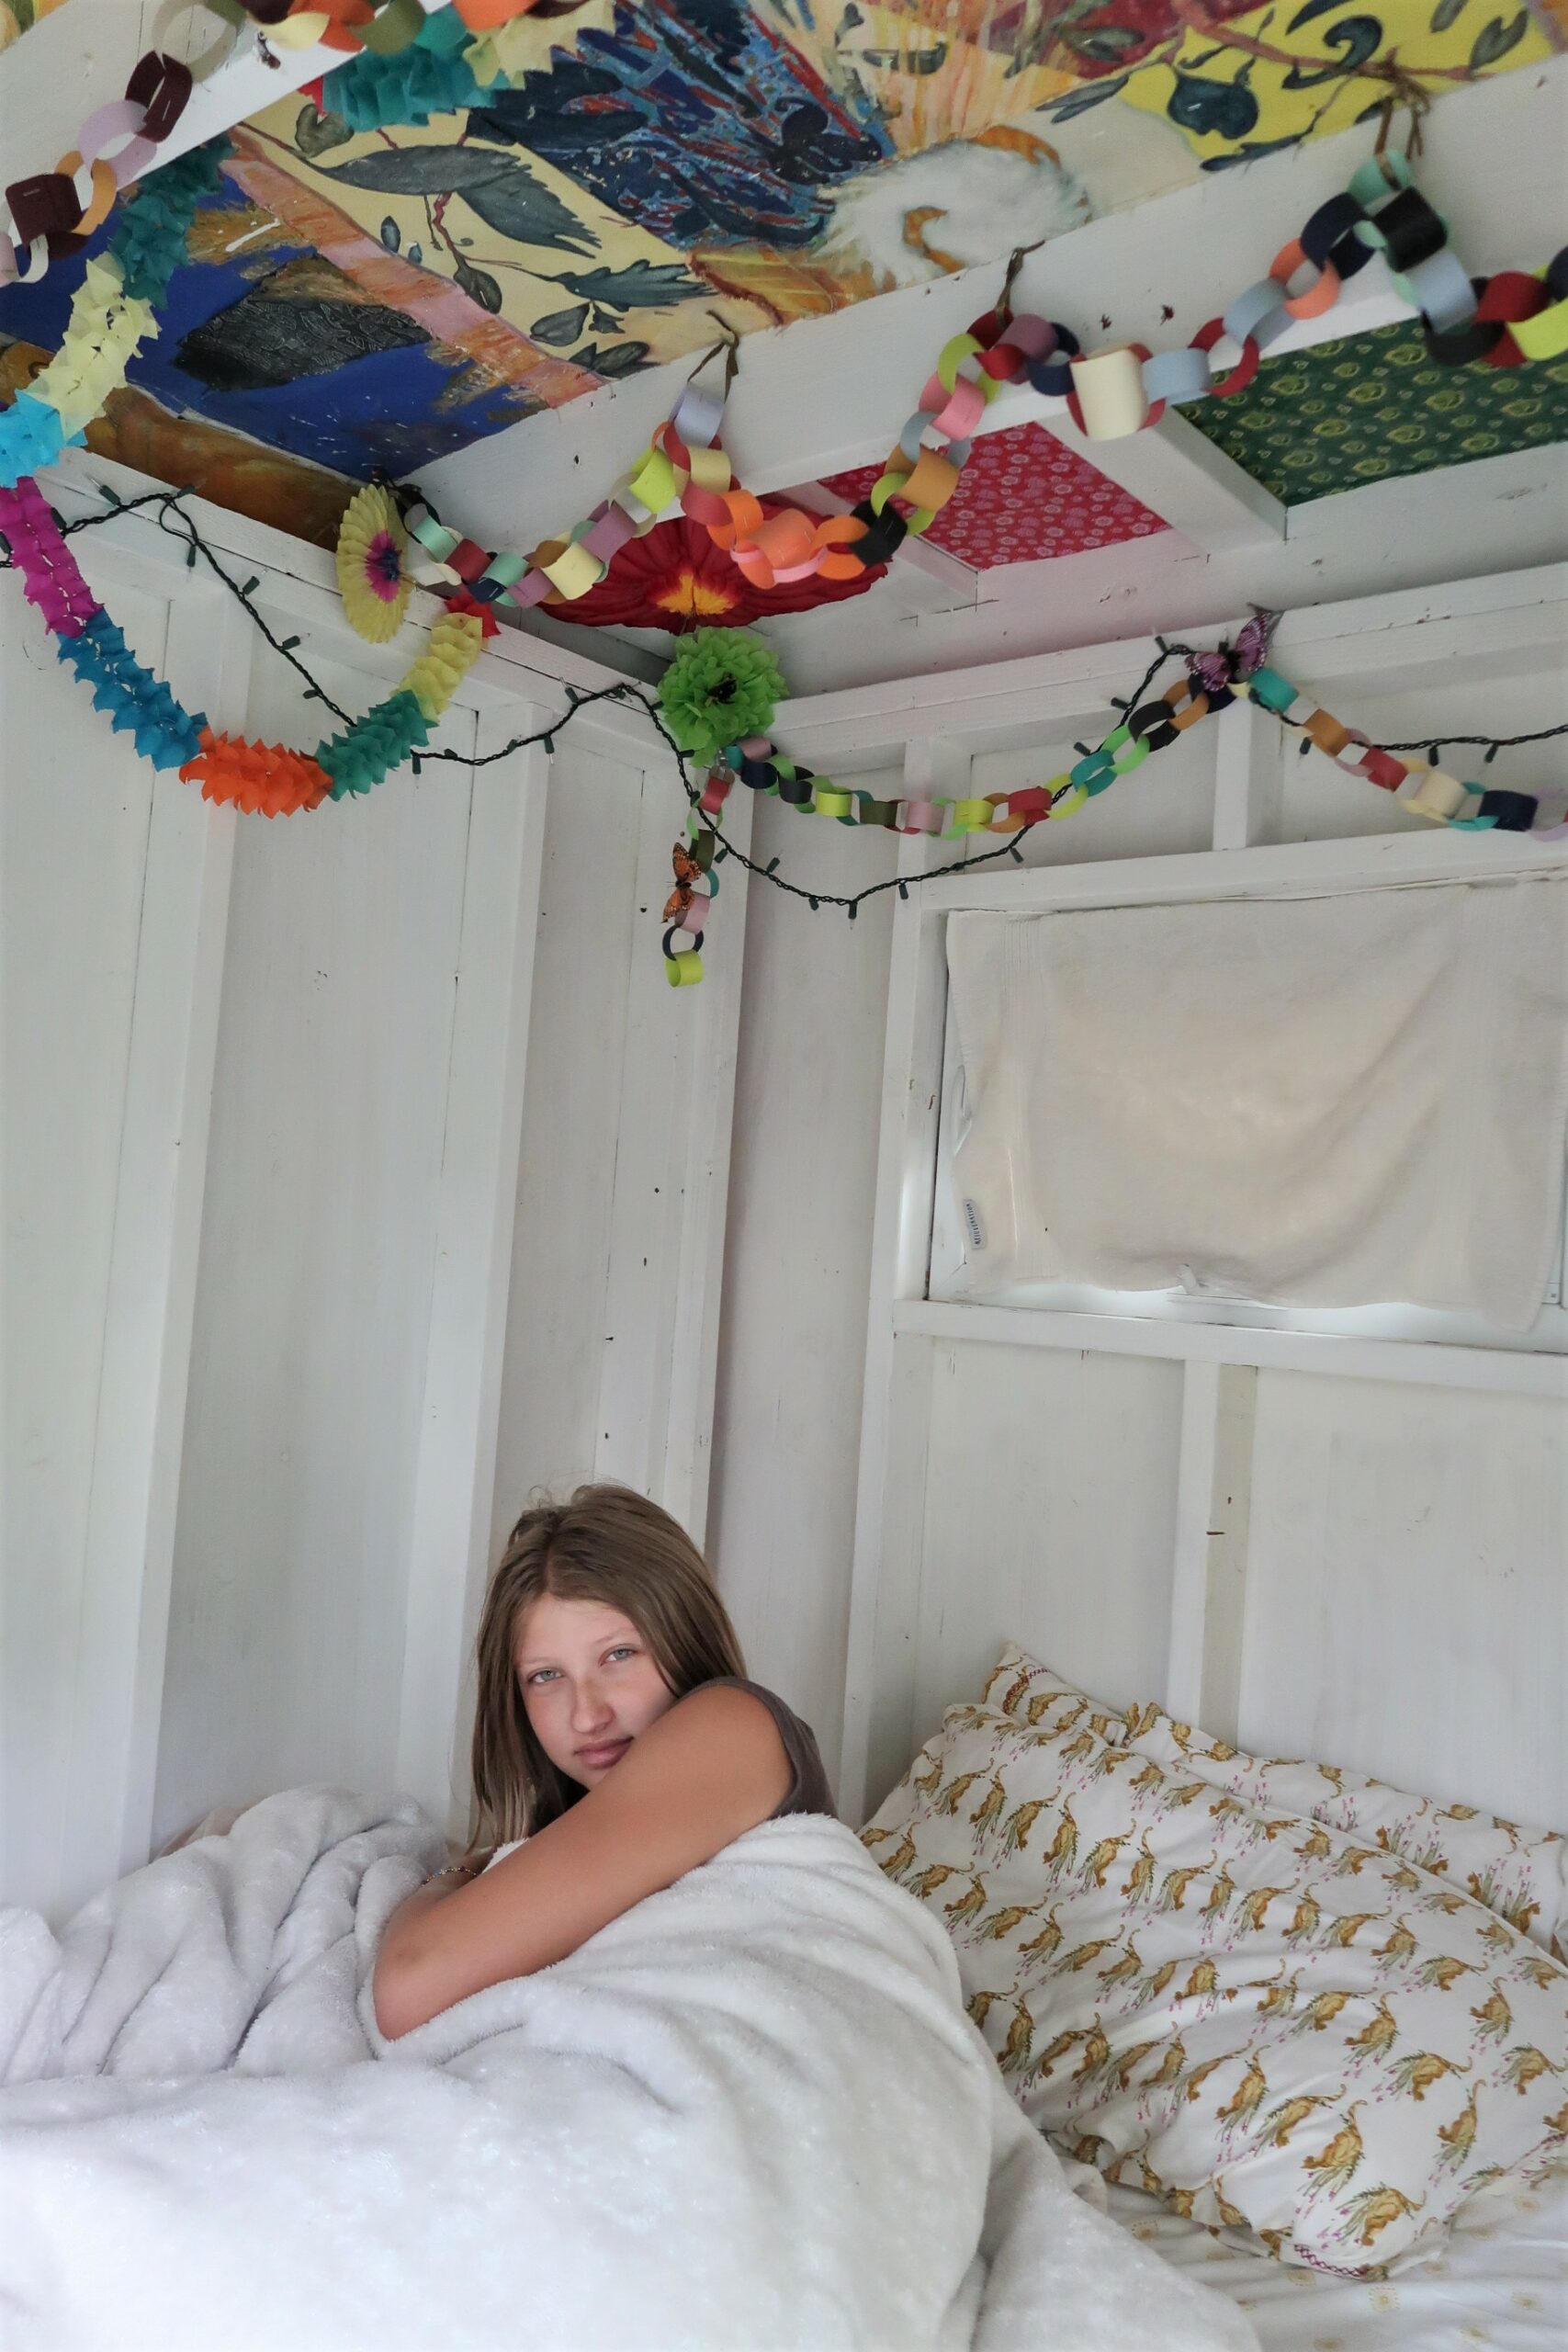 Backyard “shack” for a teenager